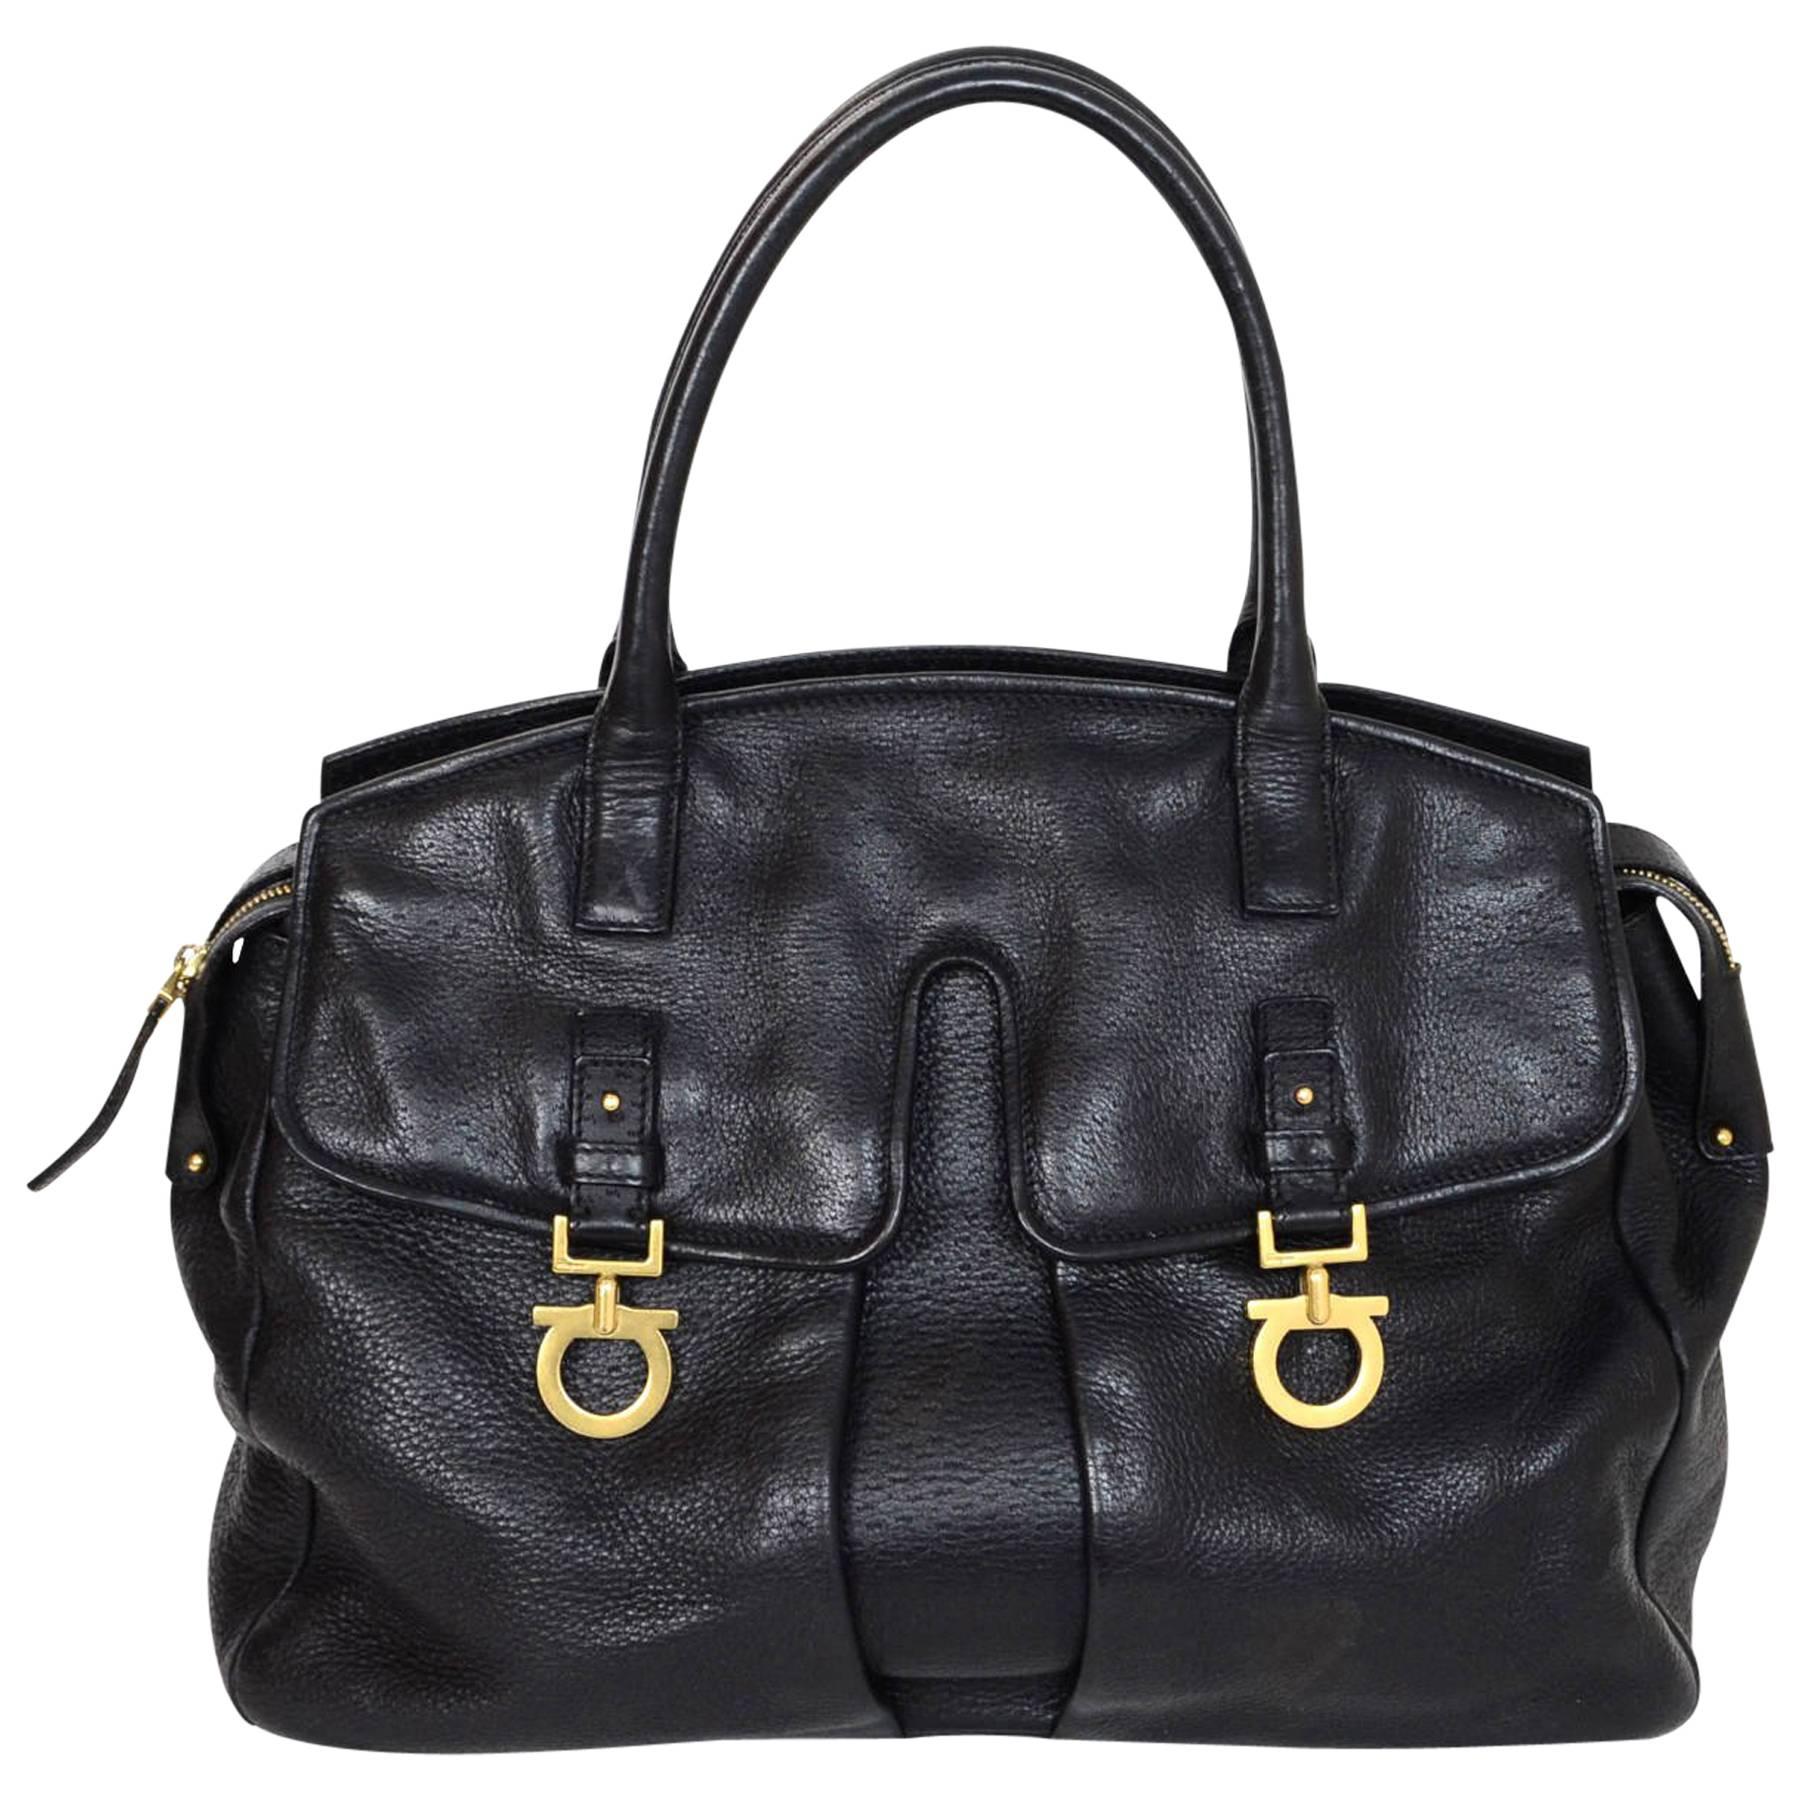 Salvatore Ferragamo Black Leather Double Pocket Satchel Bag